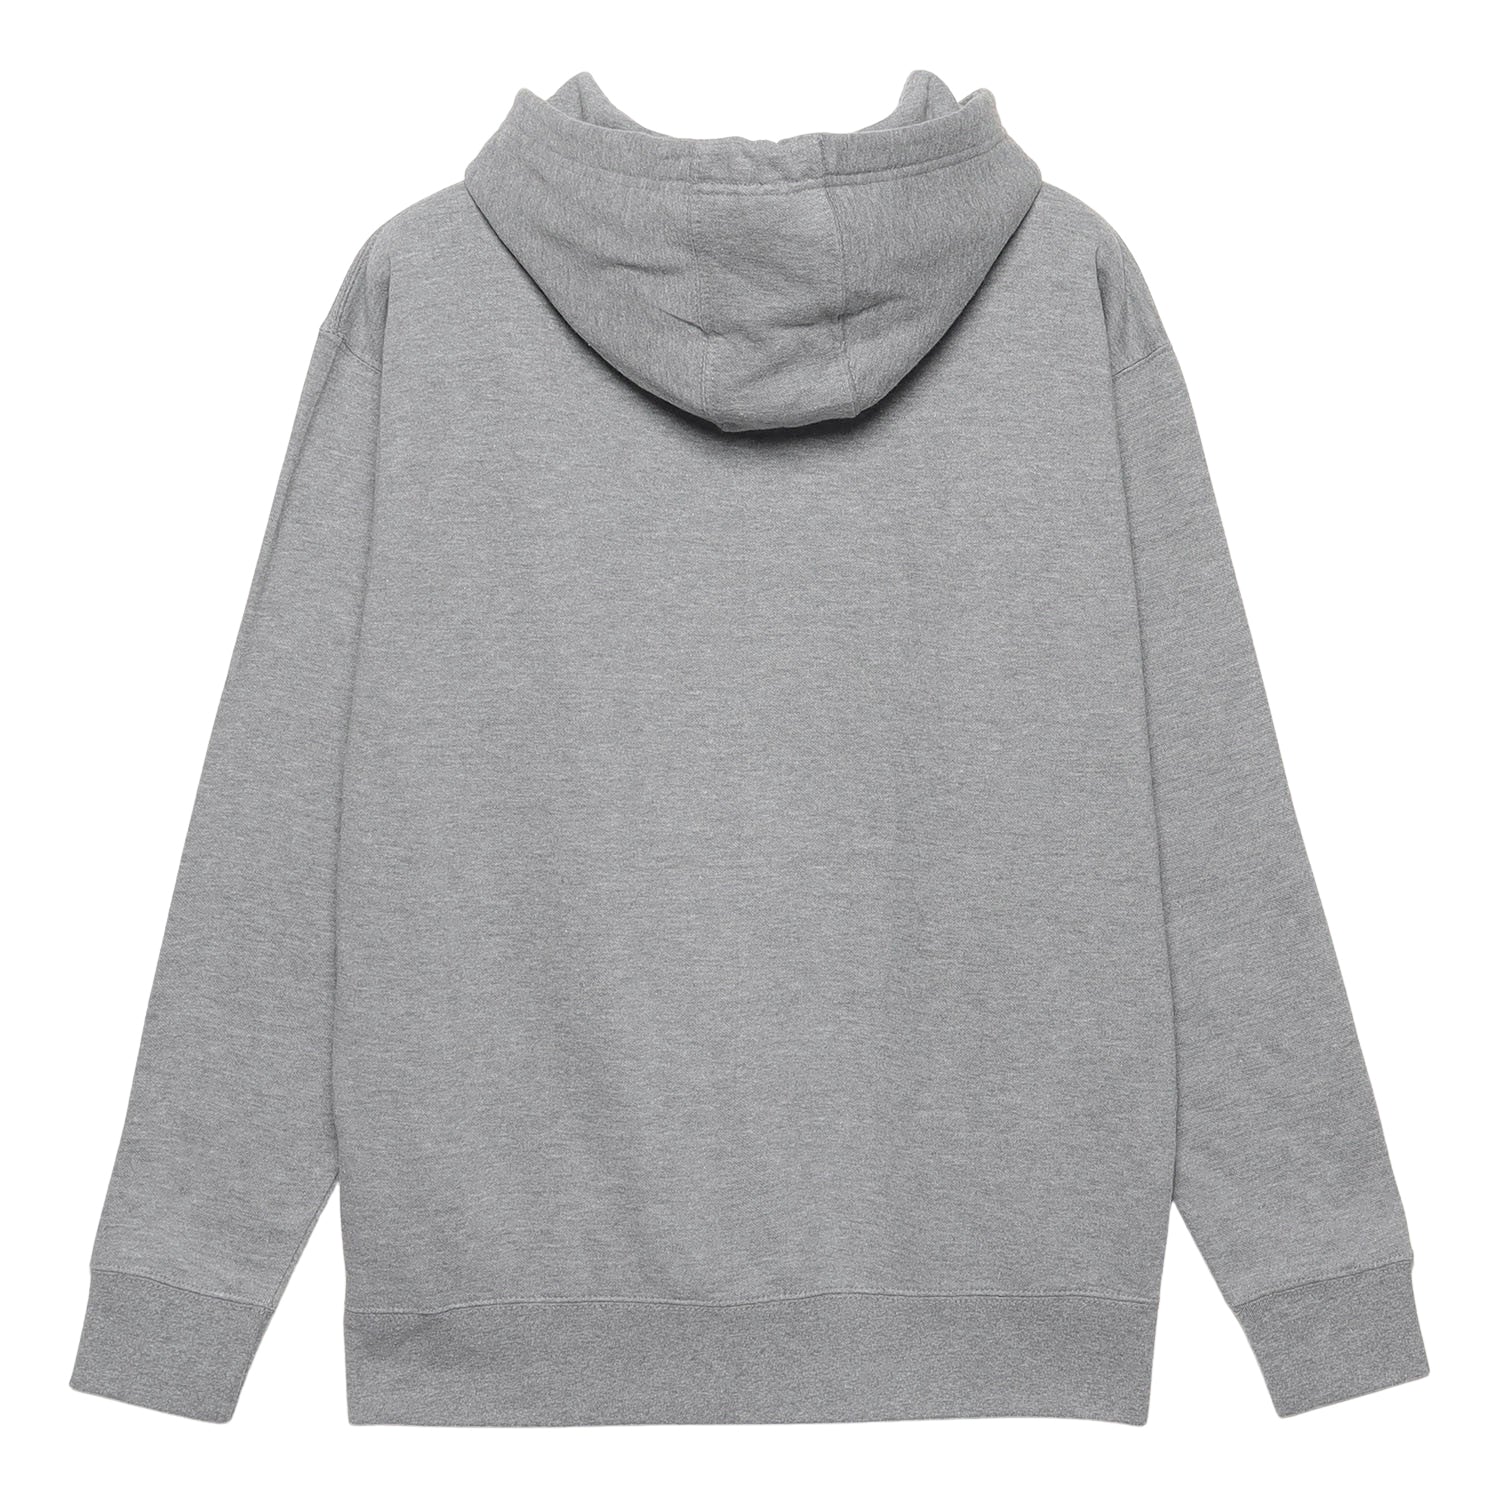 SHIBA/Shiba Inu – one premium point SHOP h hoodie SASSA / Premium Simple embroidery